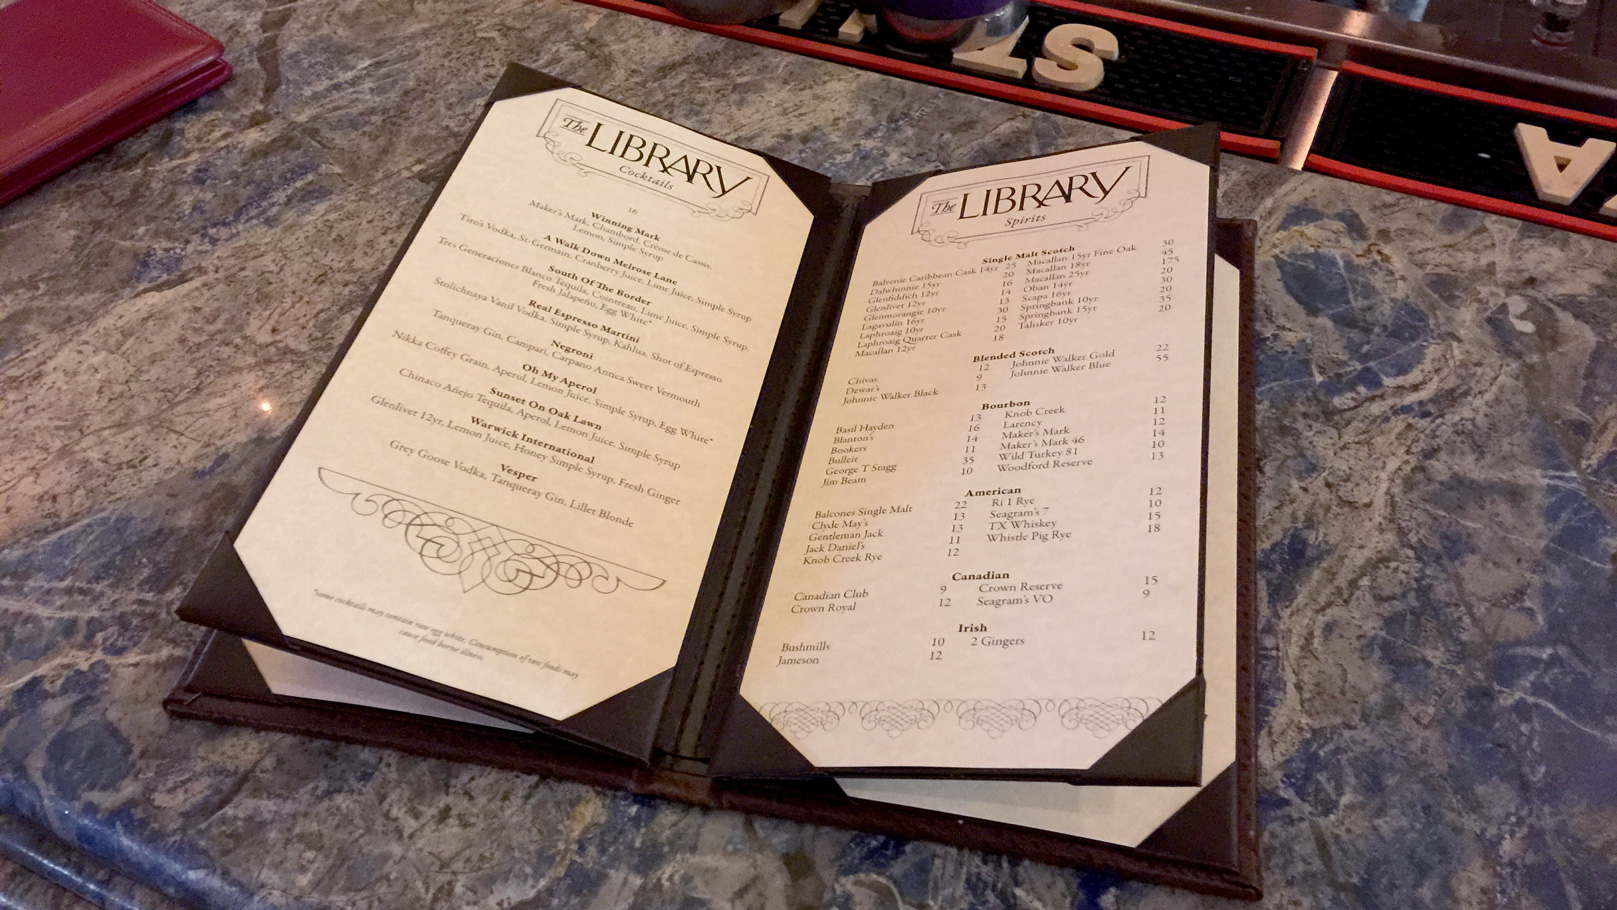 fingerprint design's photo of the Warwick's Library menu open on the bar